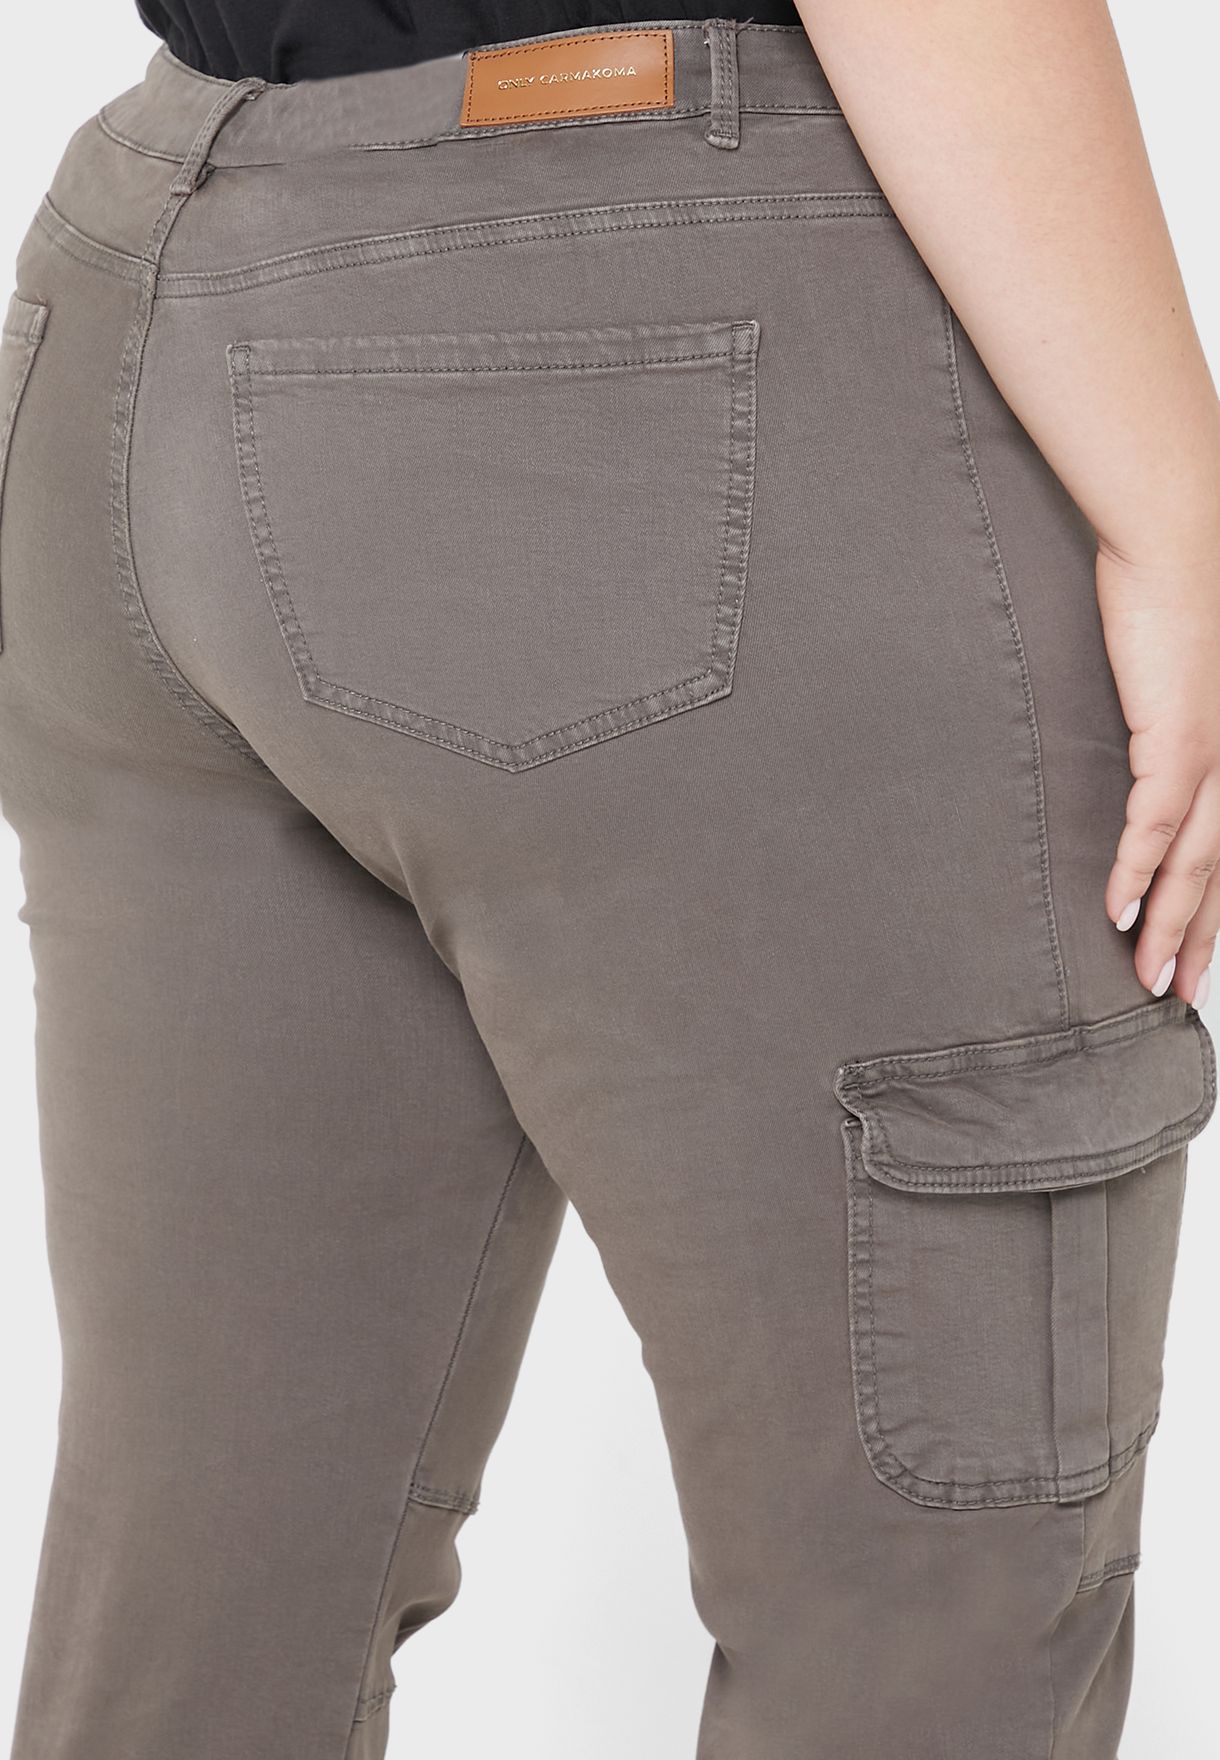 Pocket Detail Pants